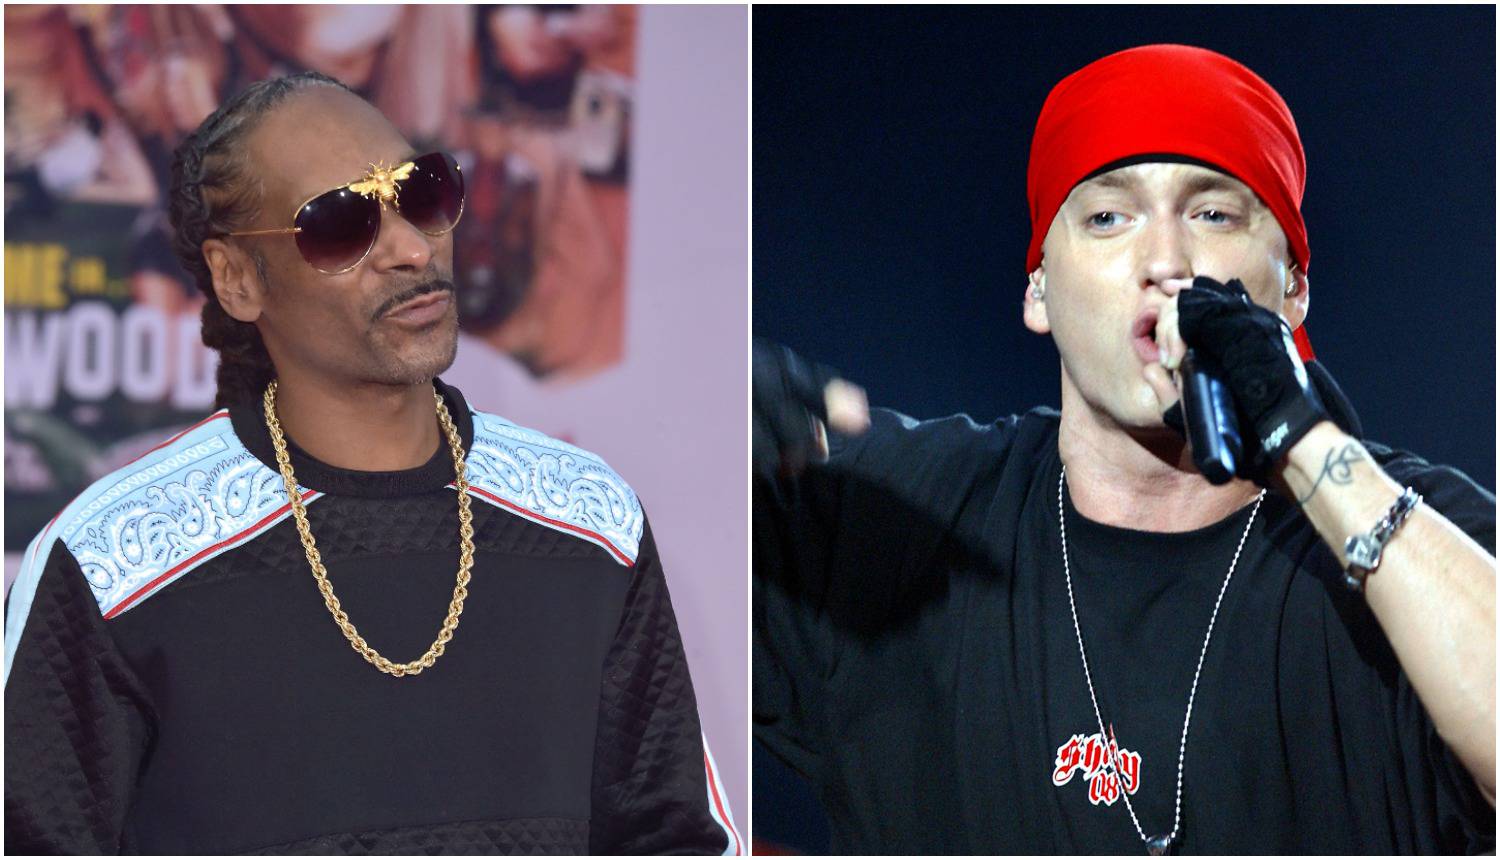 Eminem i Snoop Dogg predvodit će 'half-time show' Super Bowla